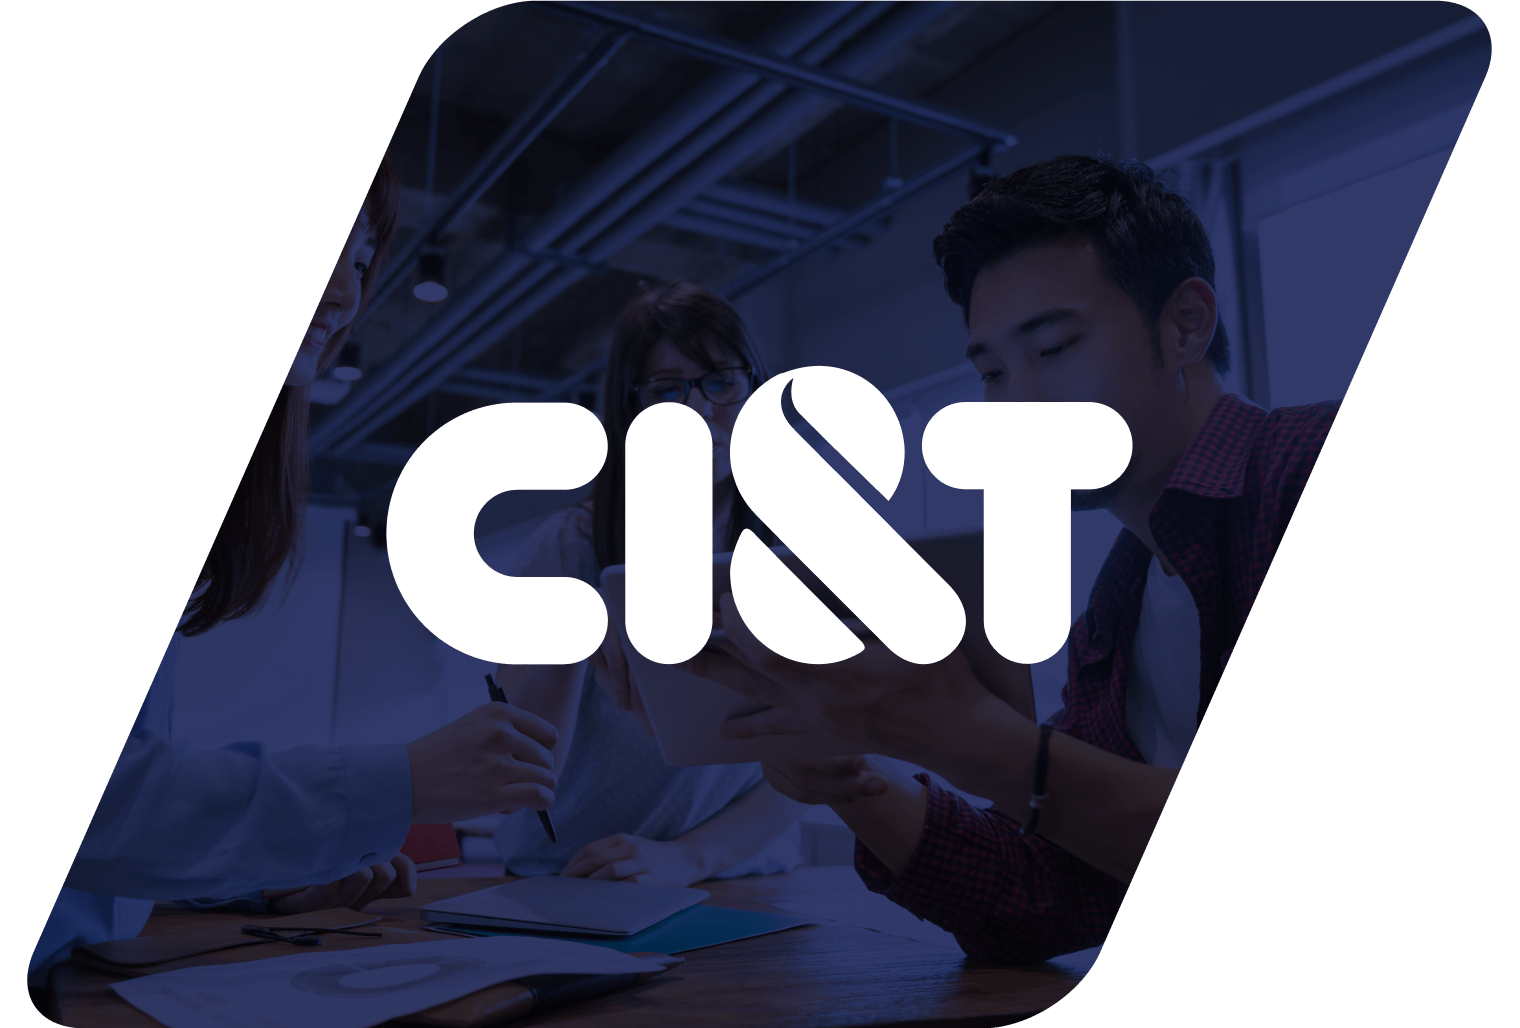 CI&T Logo in dark parallelogram